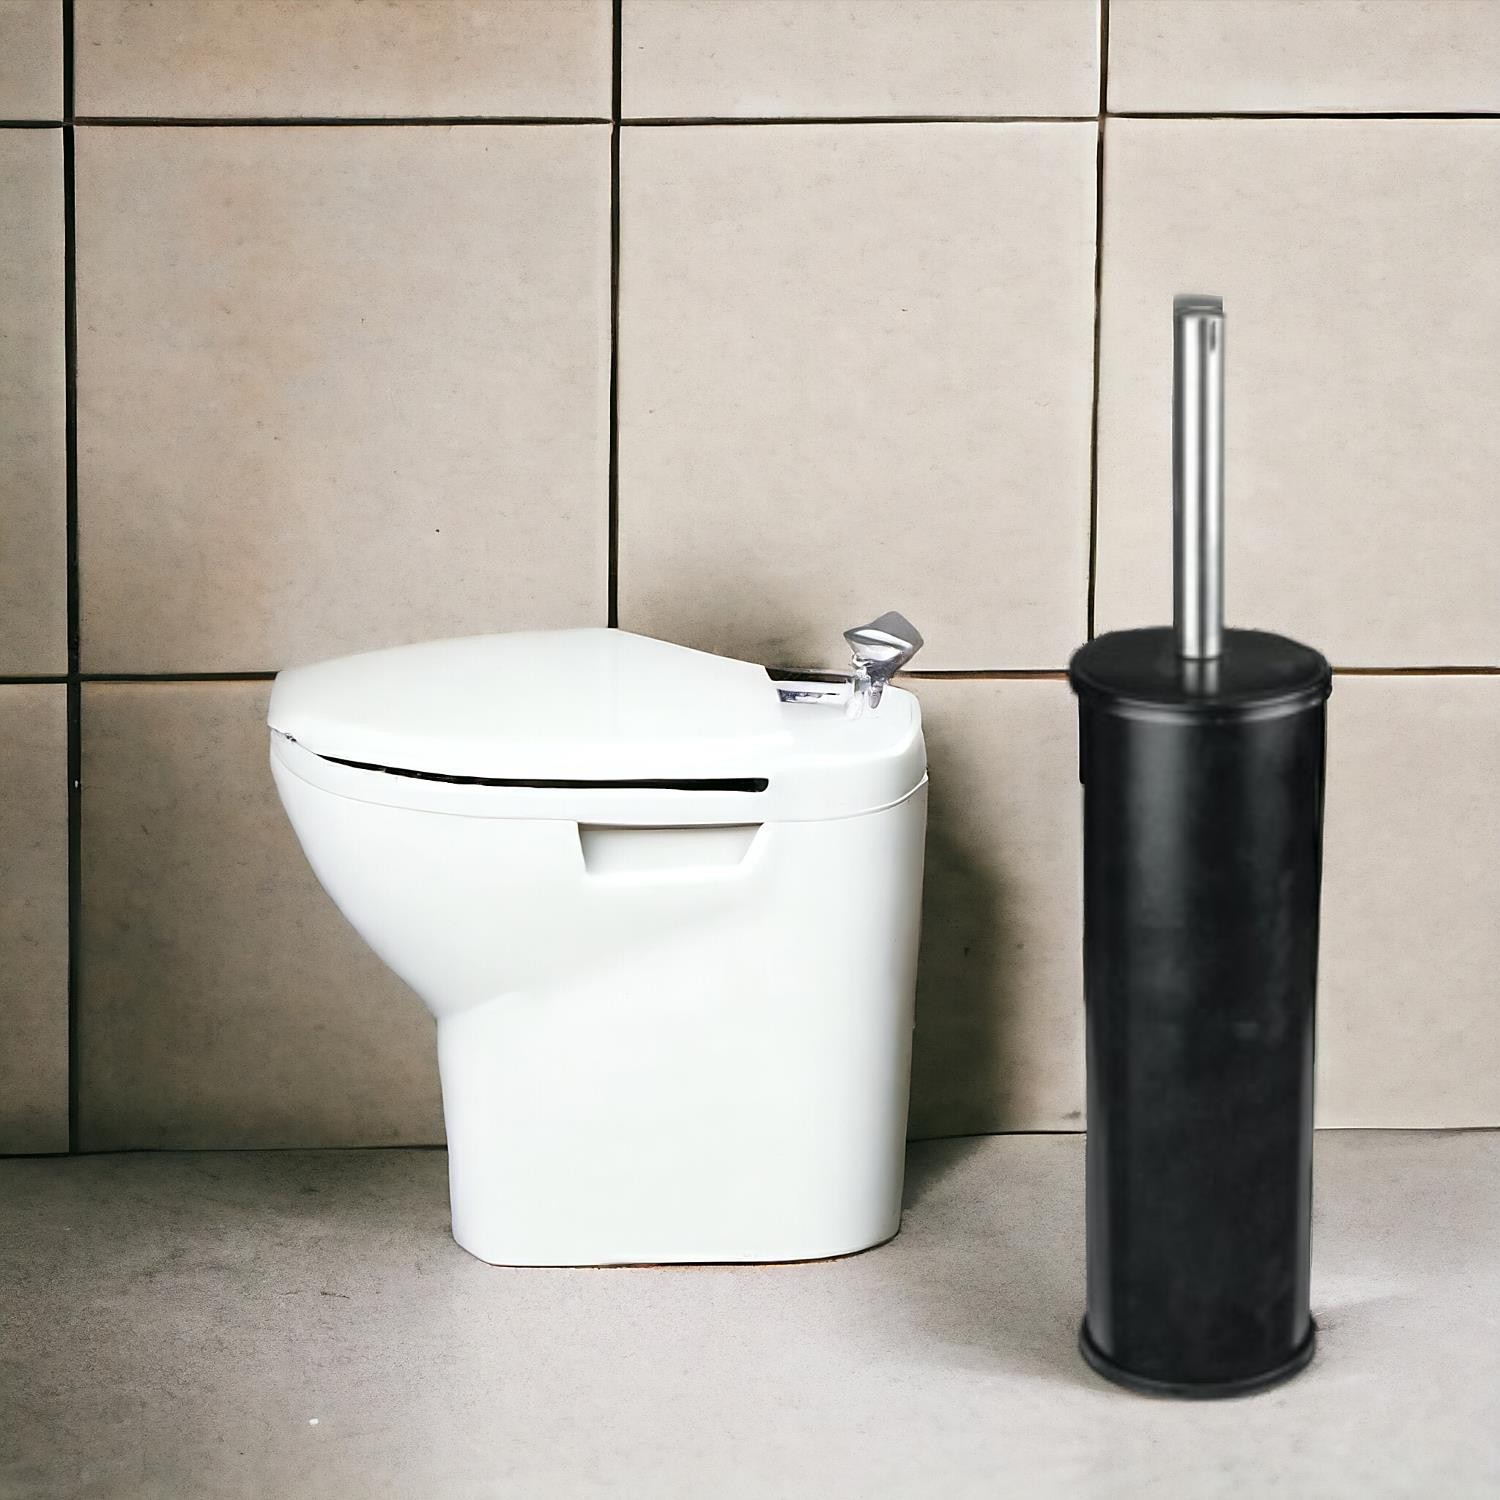 Tuvalet Alaturka Alafranga Paslanmaz Siyah Renk Metal Wc Fırçası Banyo Klozet Fırça